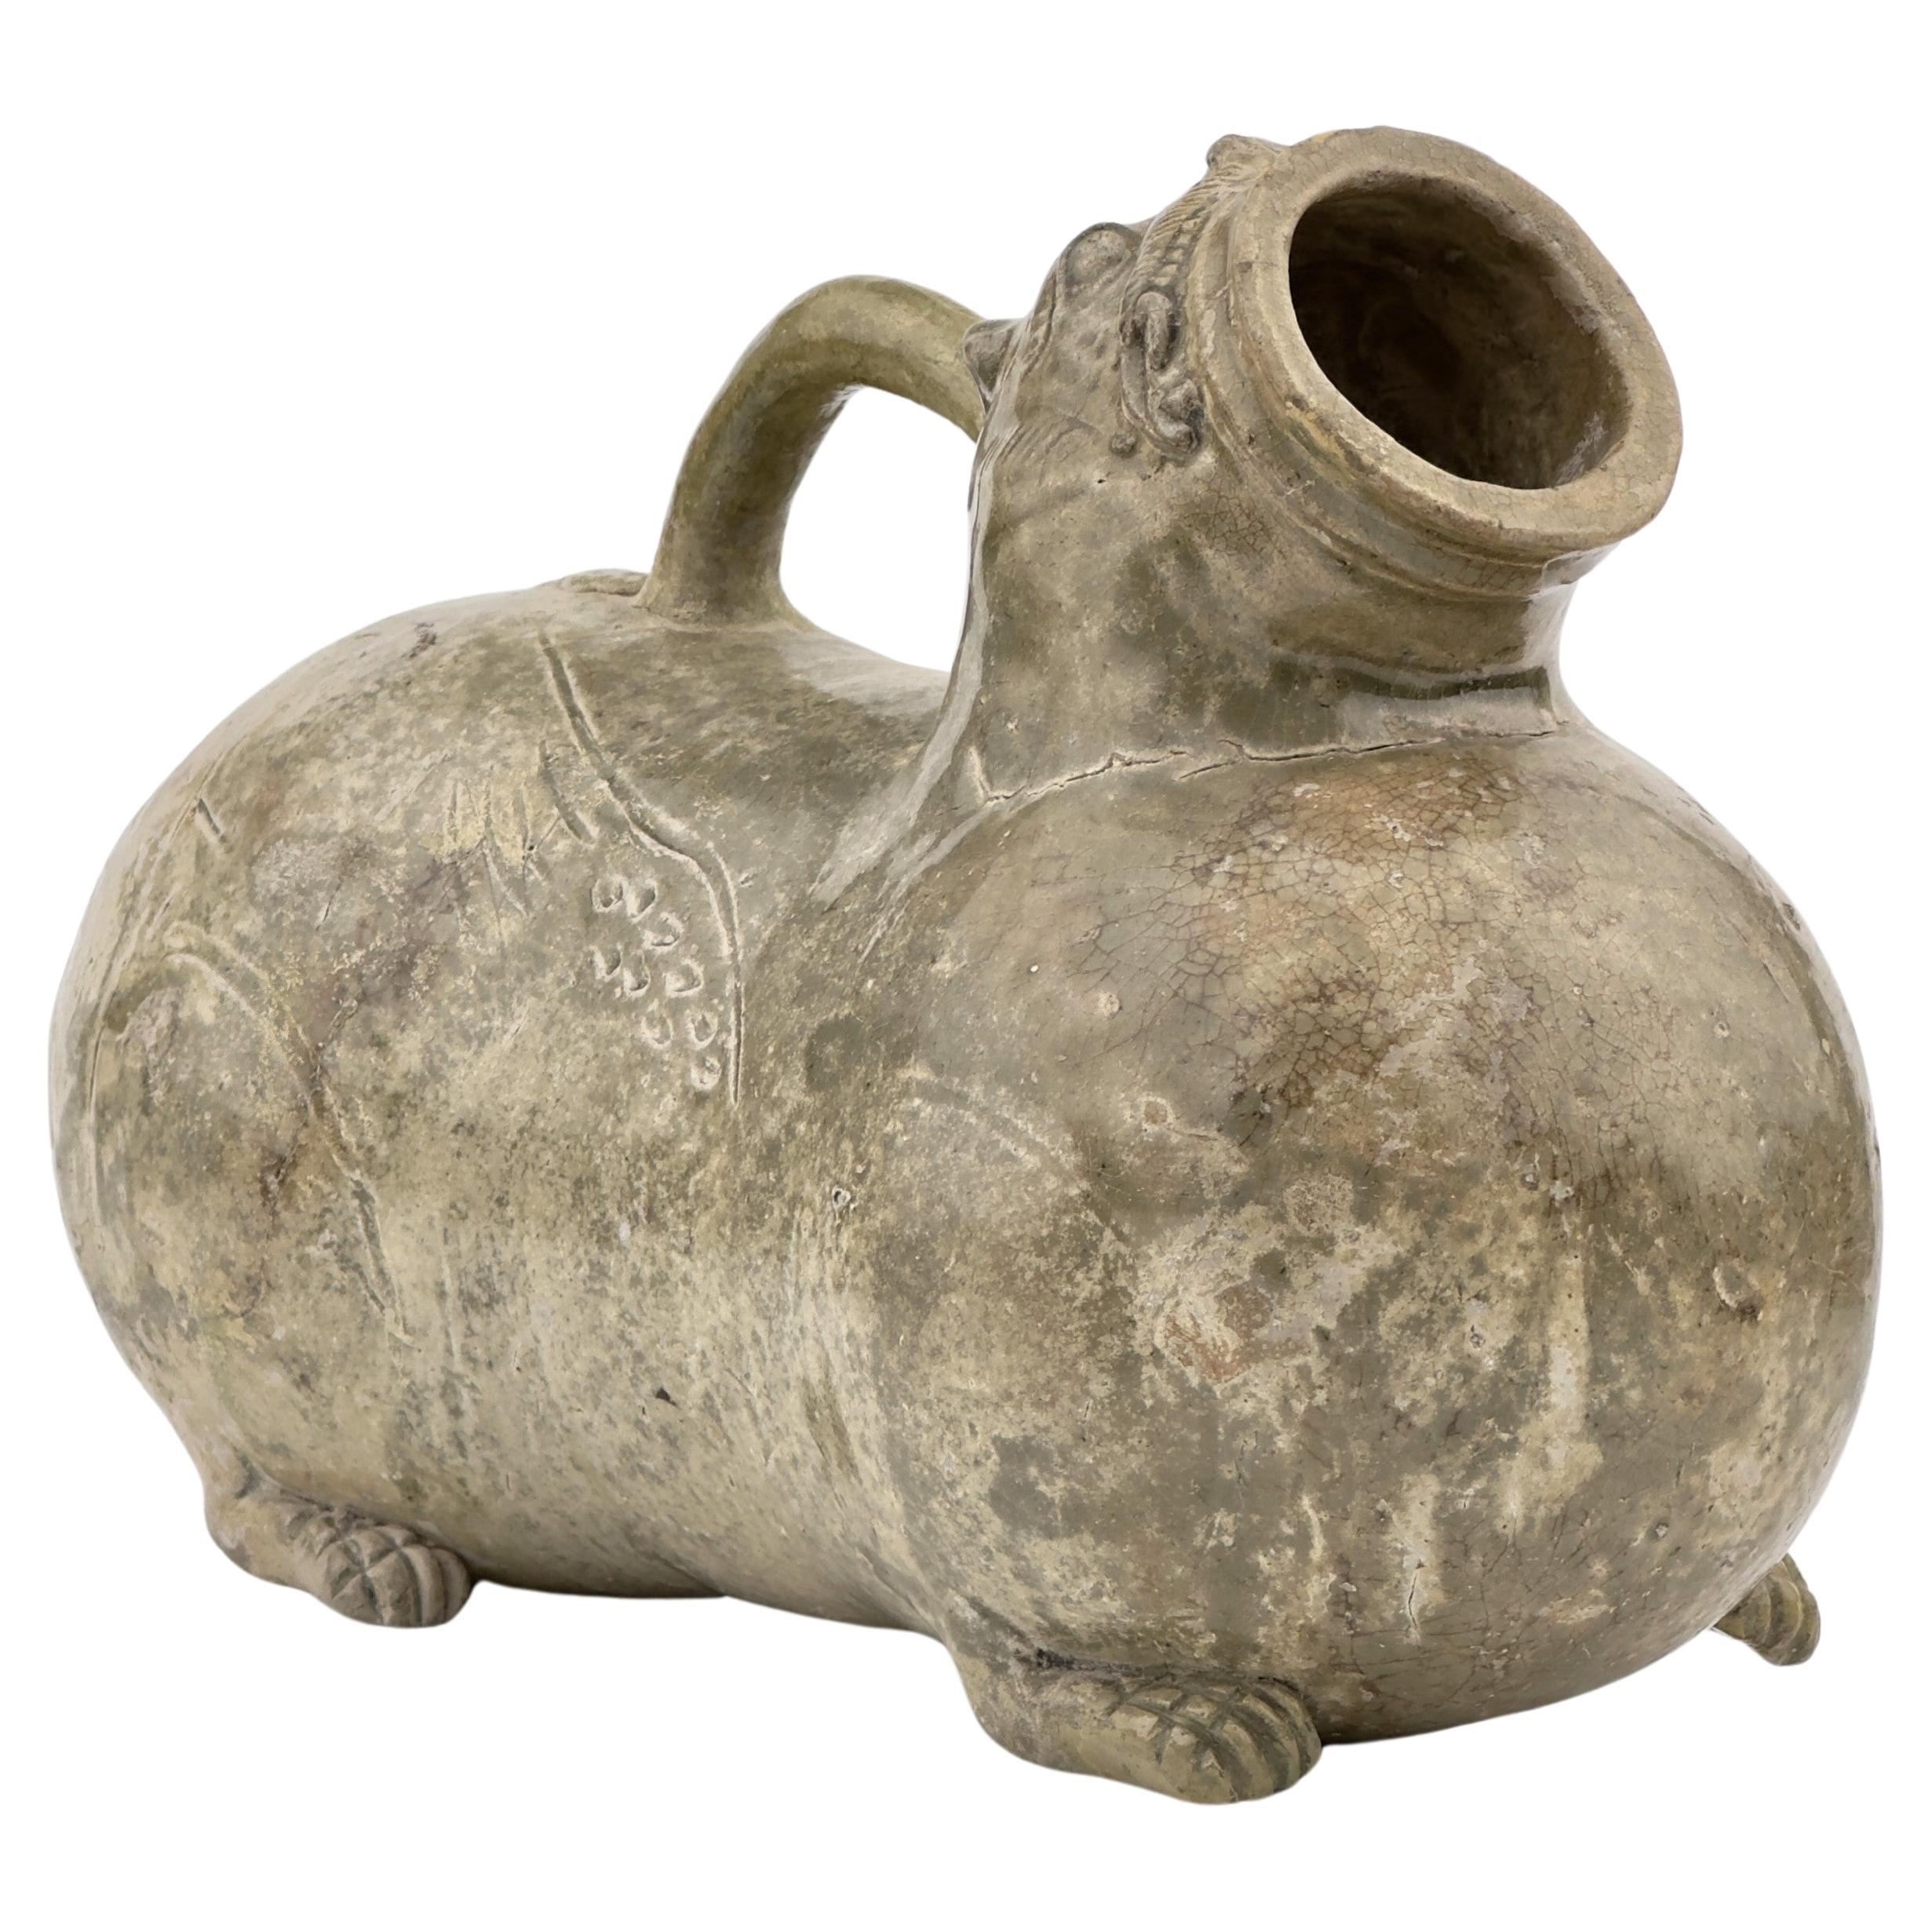 A Yue Celadon-Glazed Figural Vessel, Western Jin dynasty (265-420) For Sale